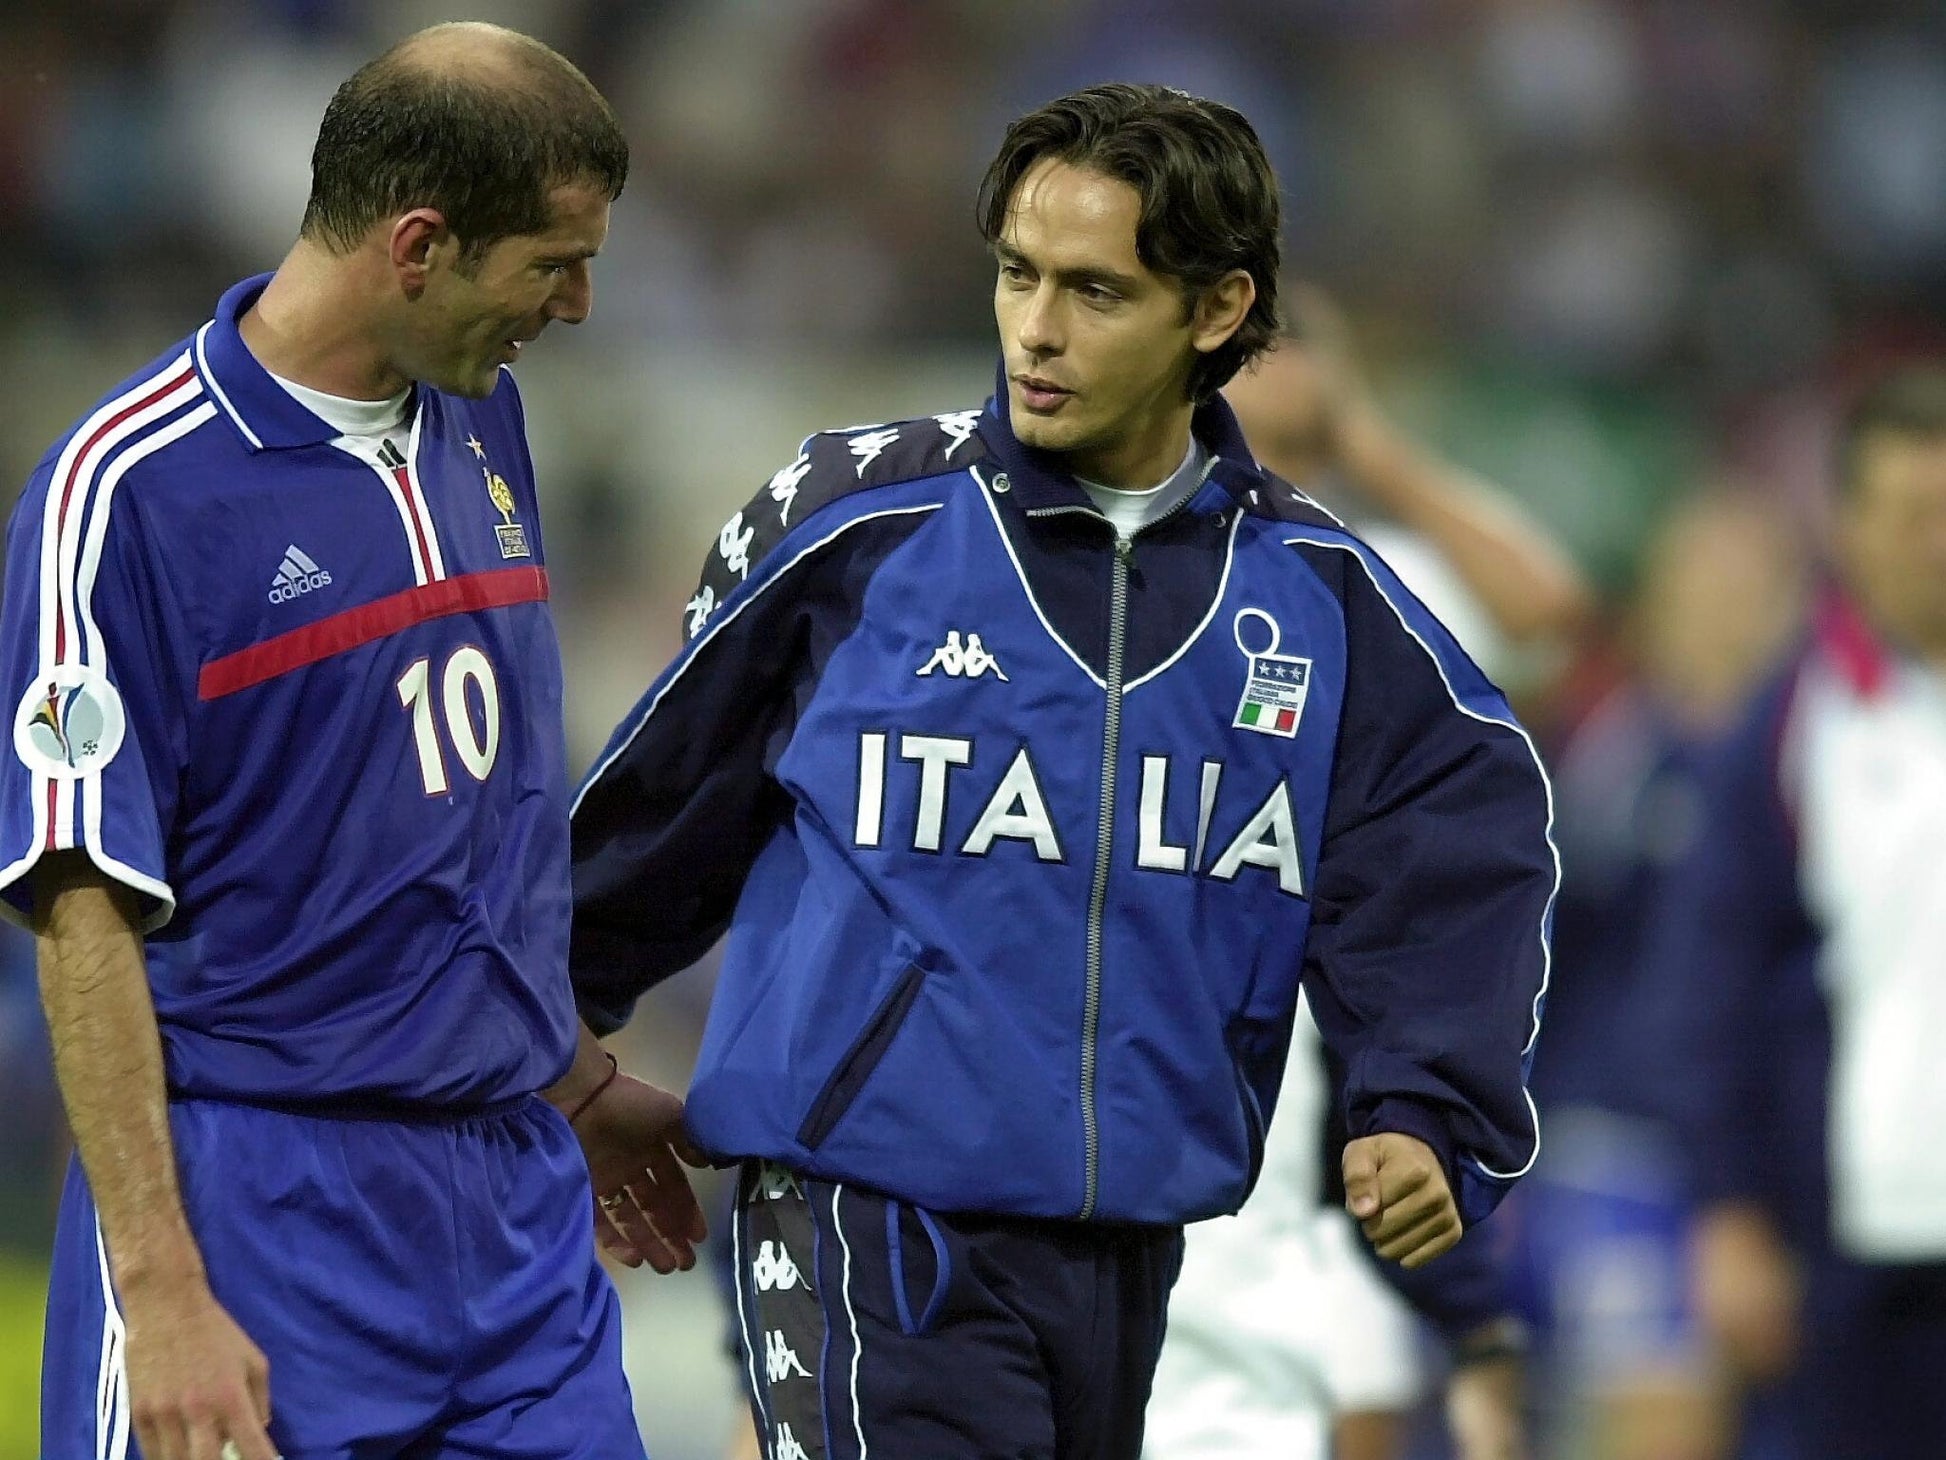 Inzaghi wearing Italy Kappa Jacket 1999 2000 Euro 2000 Zidane France